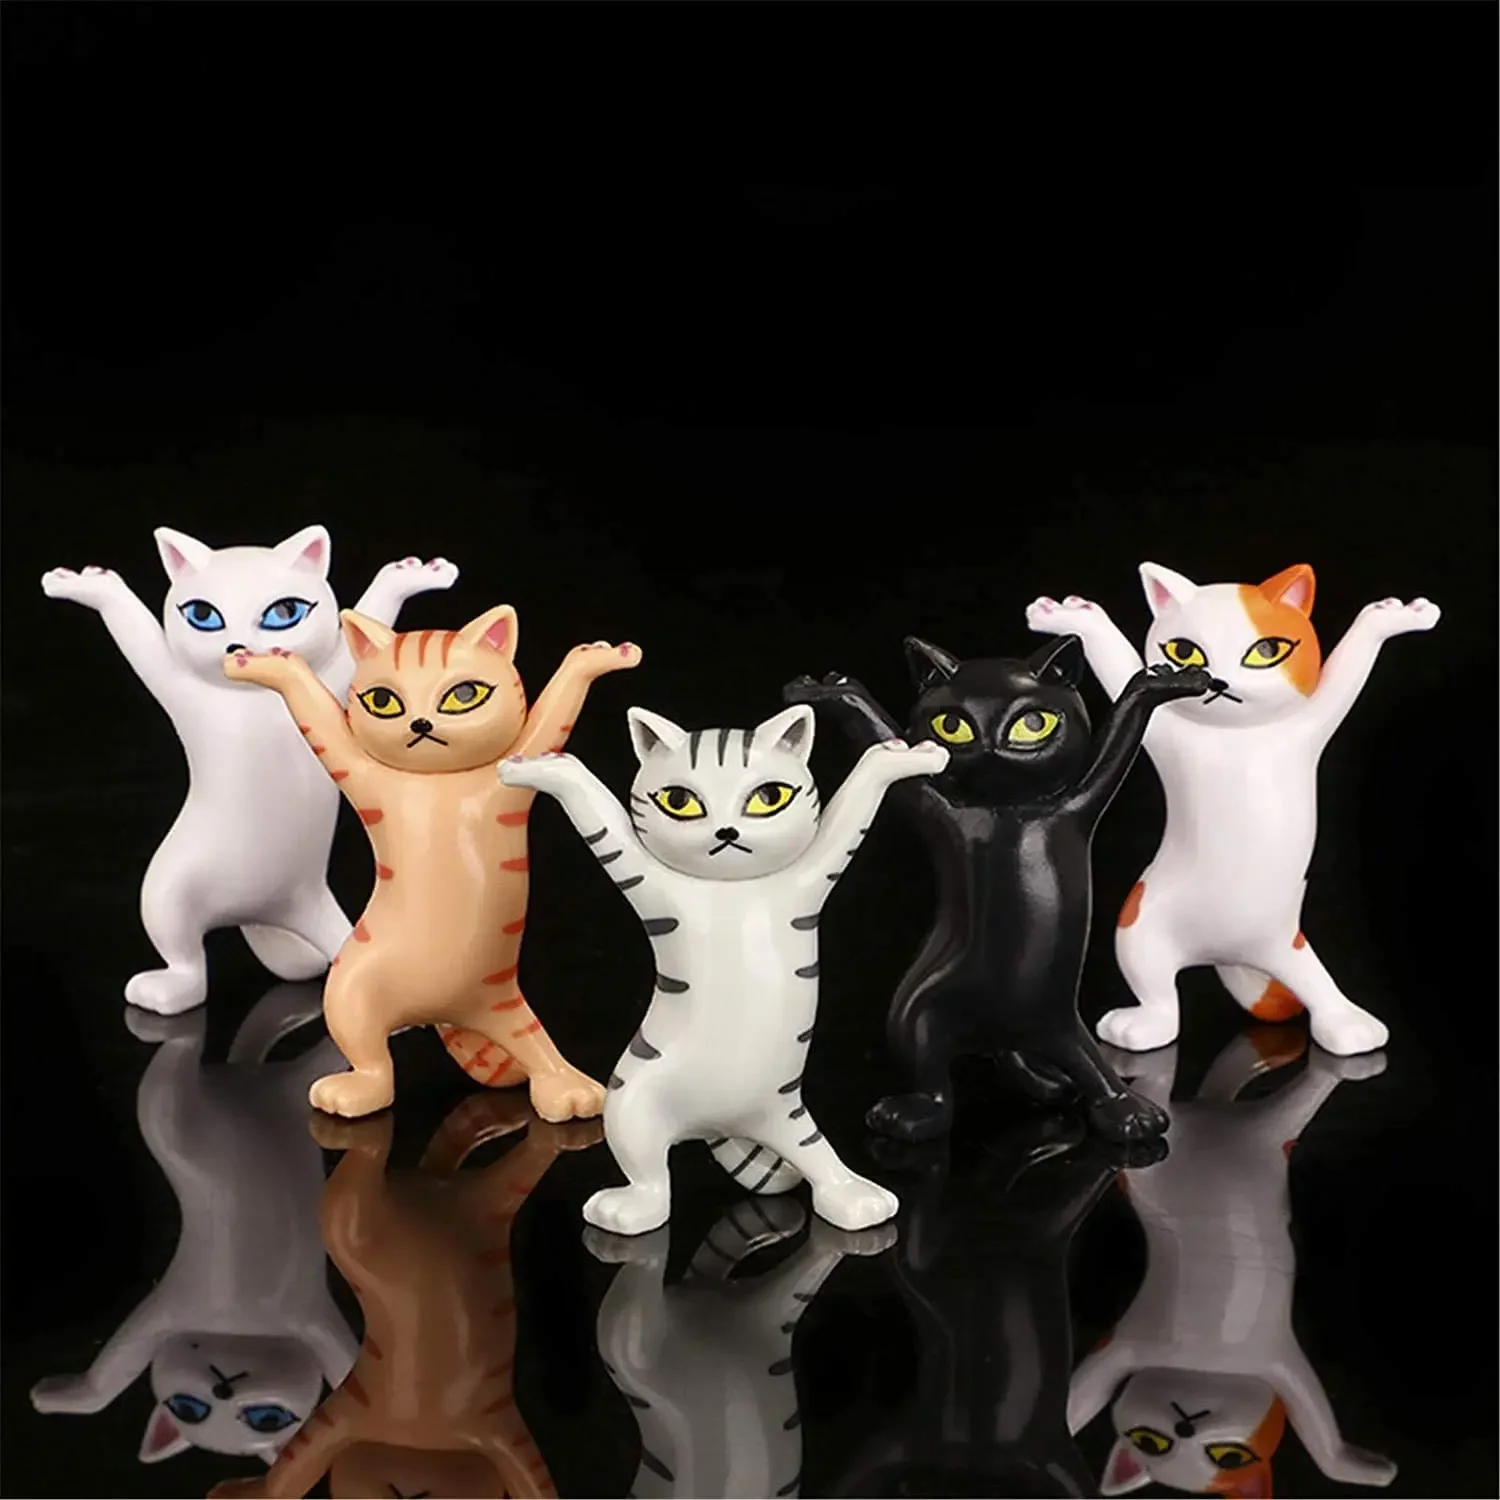 5pcs לרקוד חתולים עט AirPods מחזיקי חתול פסלון קישוט הרמת משקולות החתול מחזיק עט מיני חתול דמויות צעצוע Playset מתנה יפן - 5